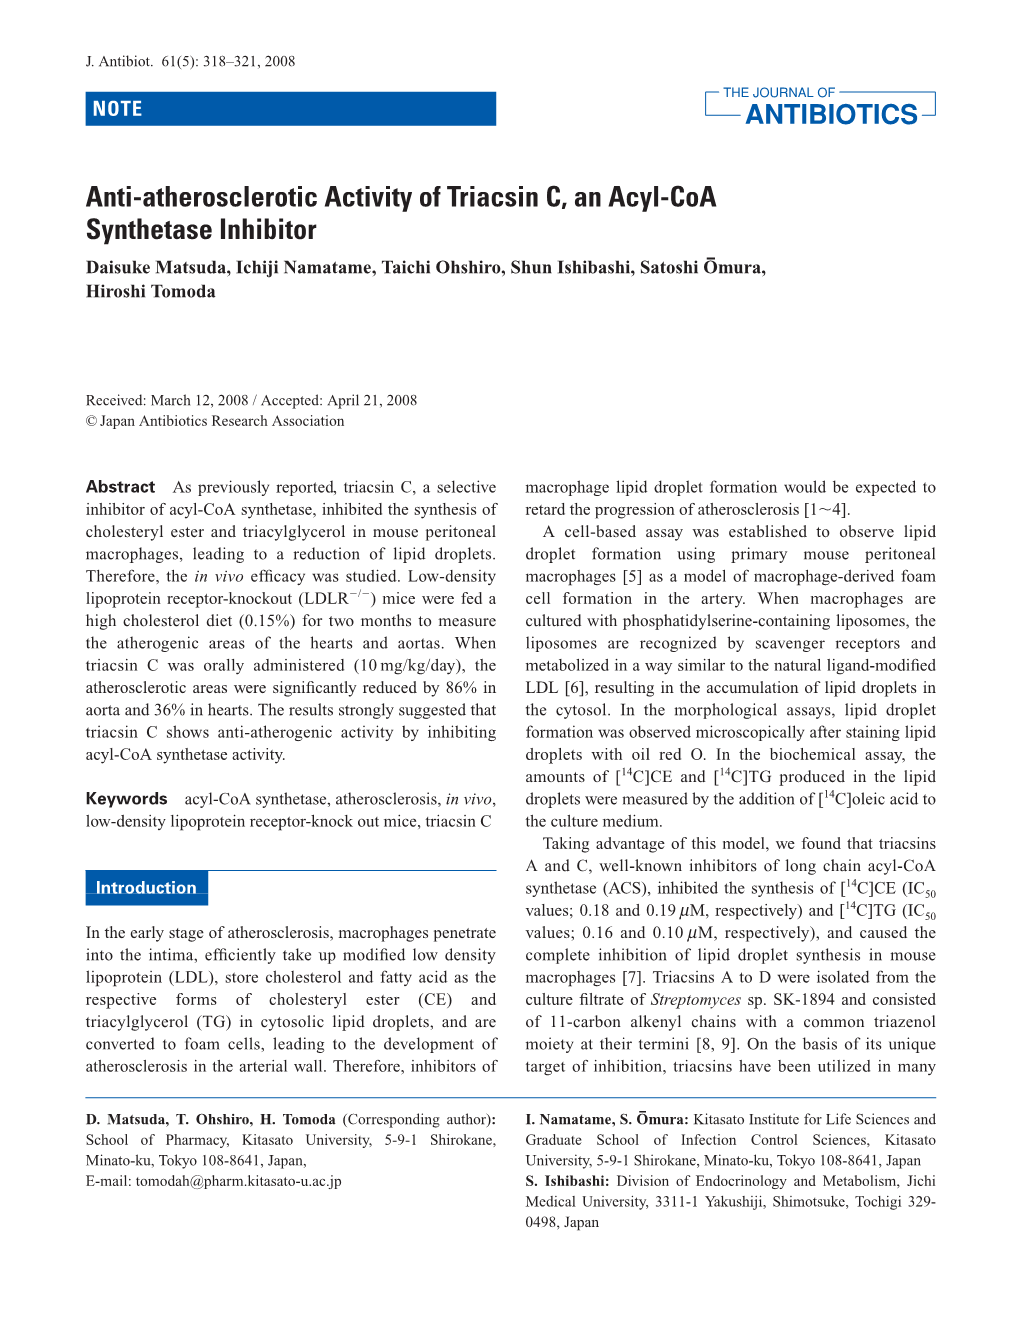 Anti-Atherosclerotic Activity of Triacsin C, an Acyl-Coa Synthetase Inhibitor